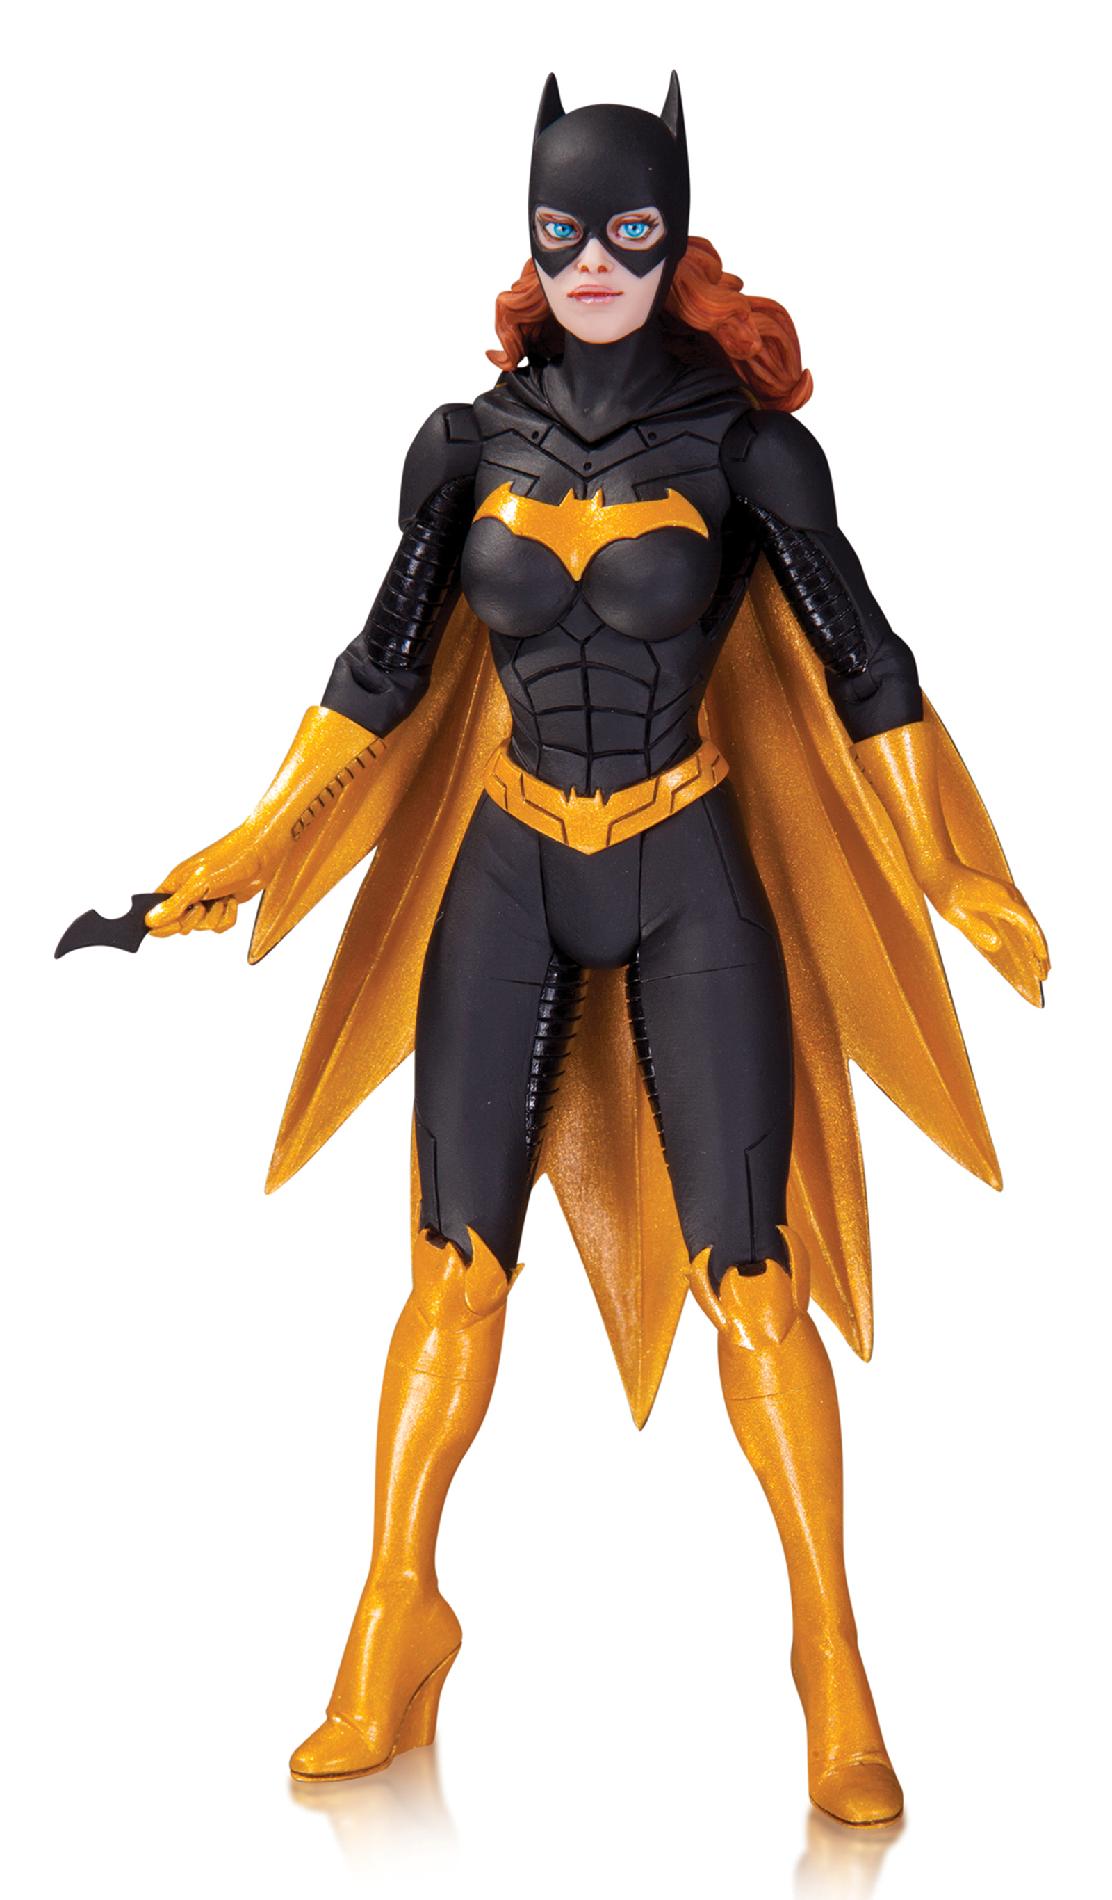 Designer Series 3 Batgirl Action Figure